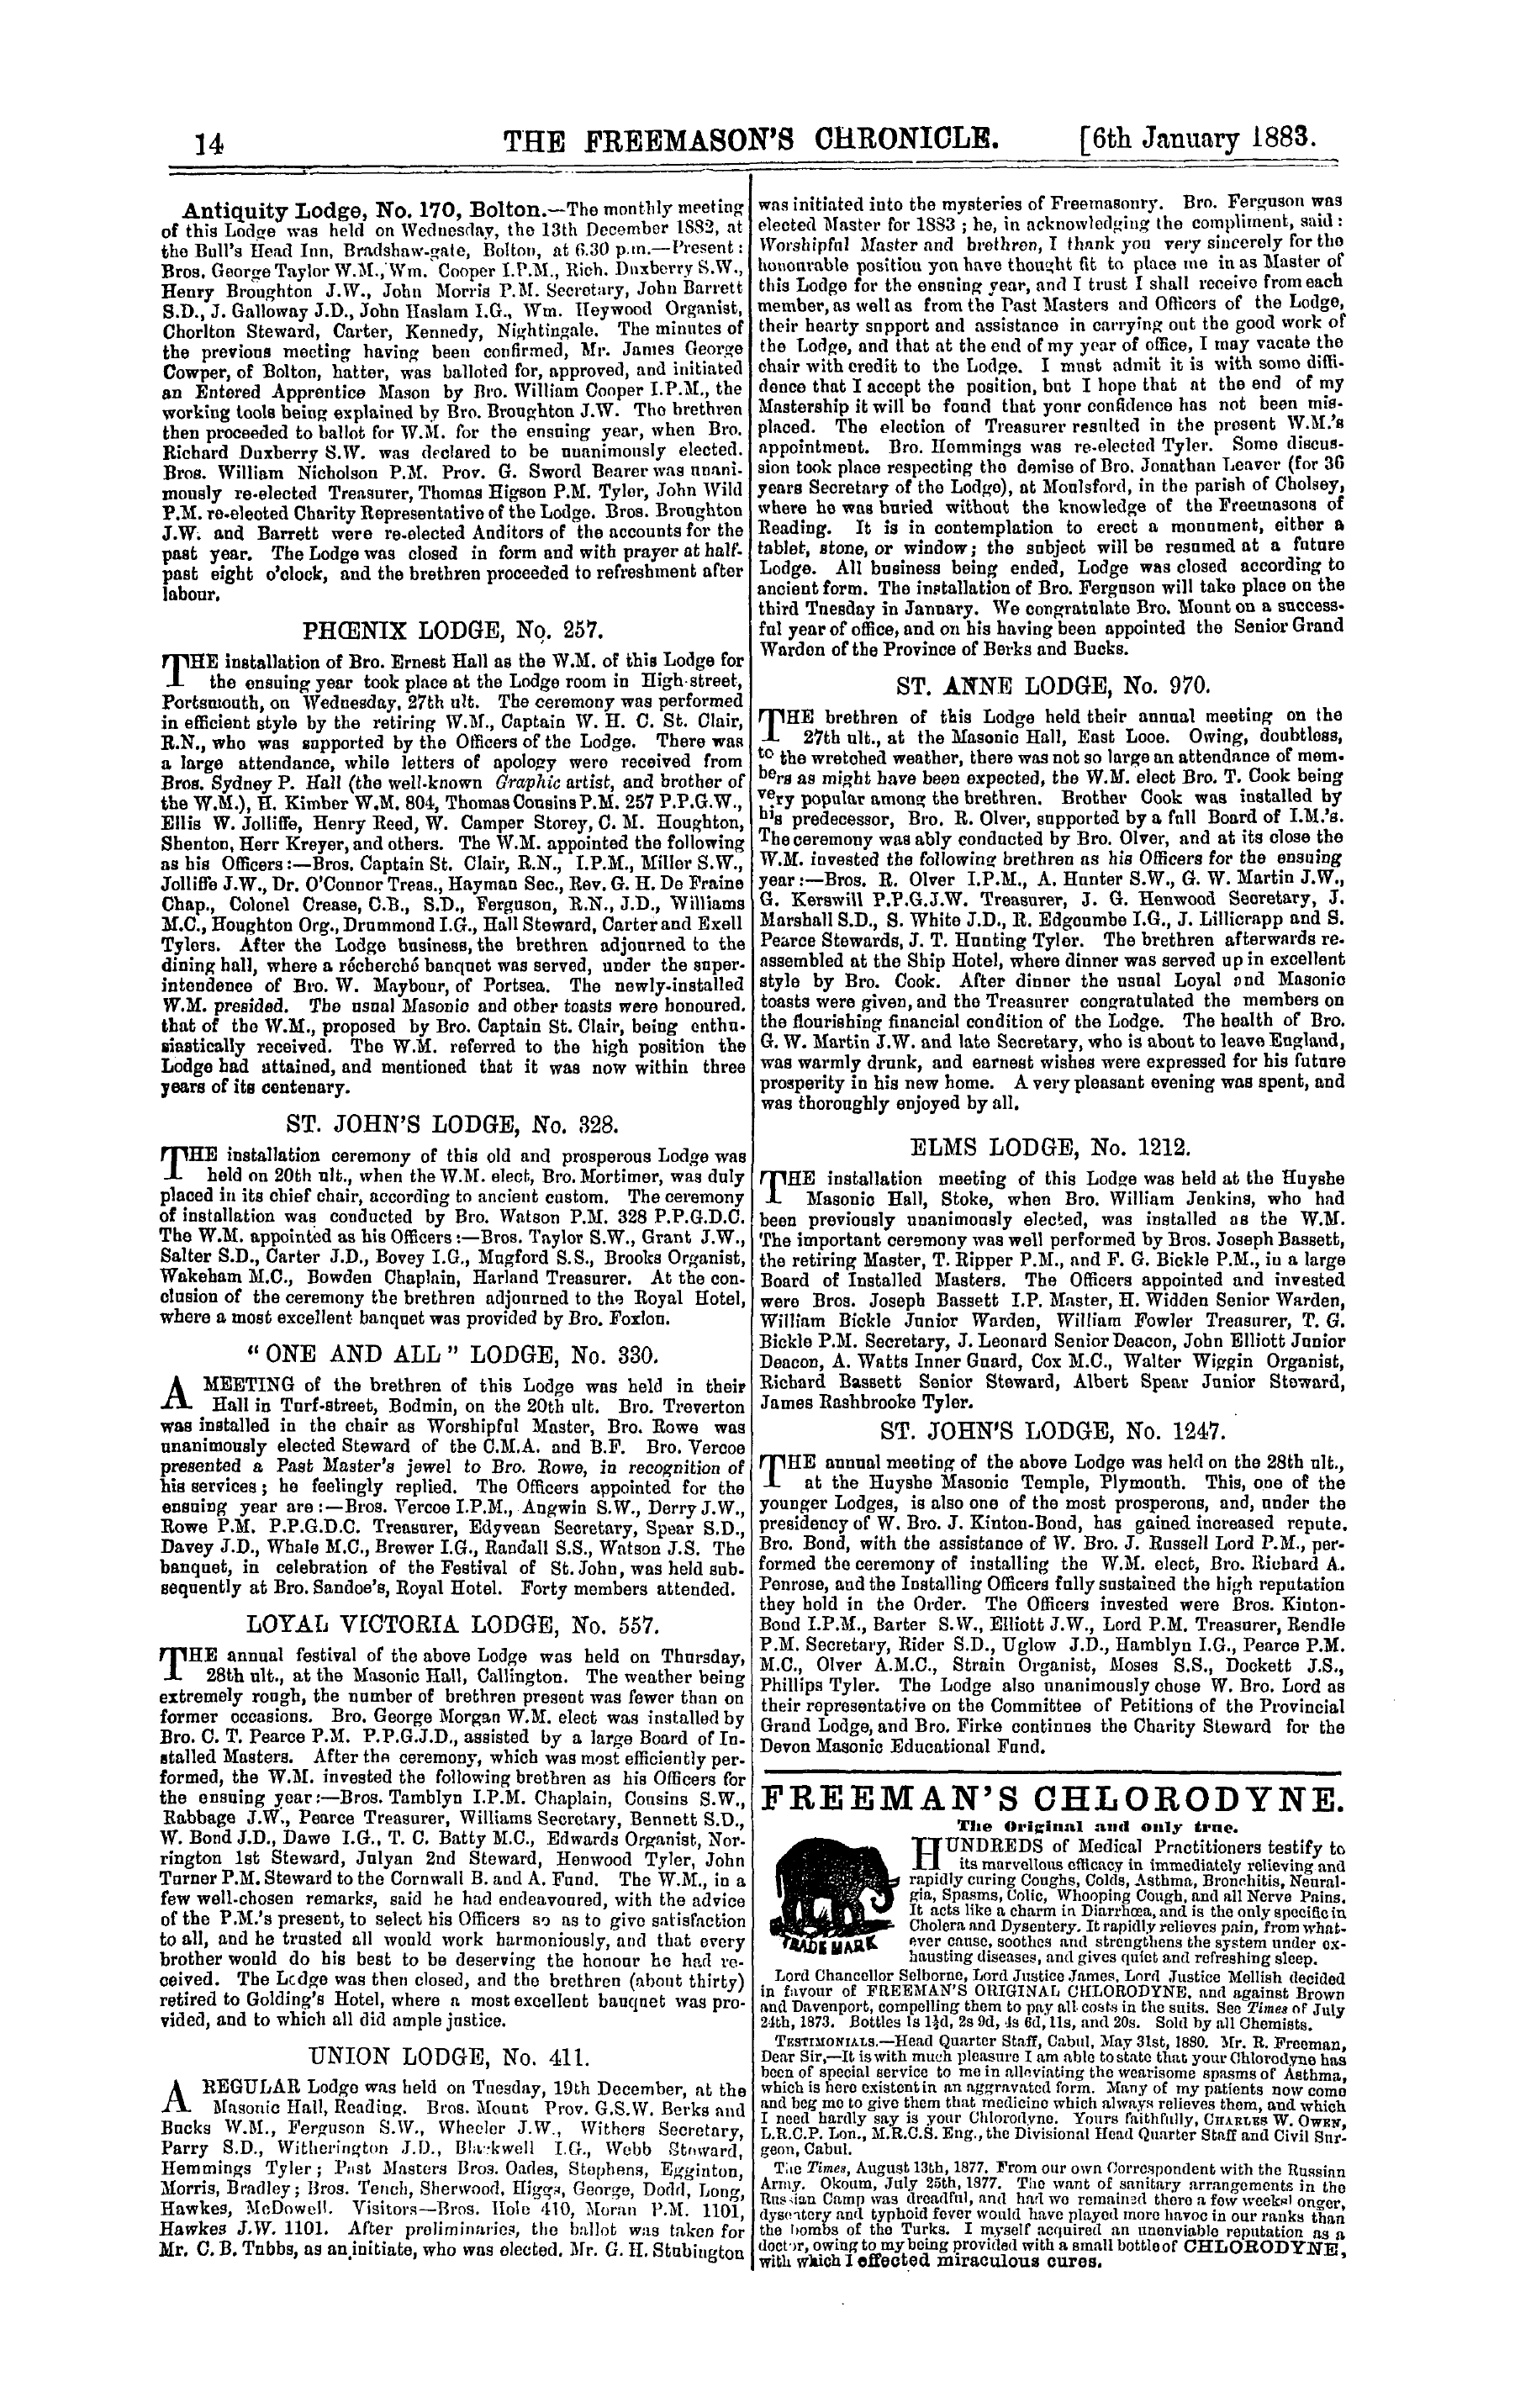 The Freemason's Chronicle: 1883-01-06 - Installation Meetings, &C.